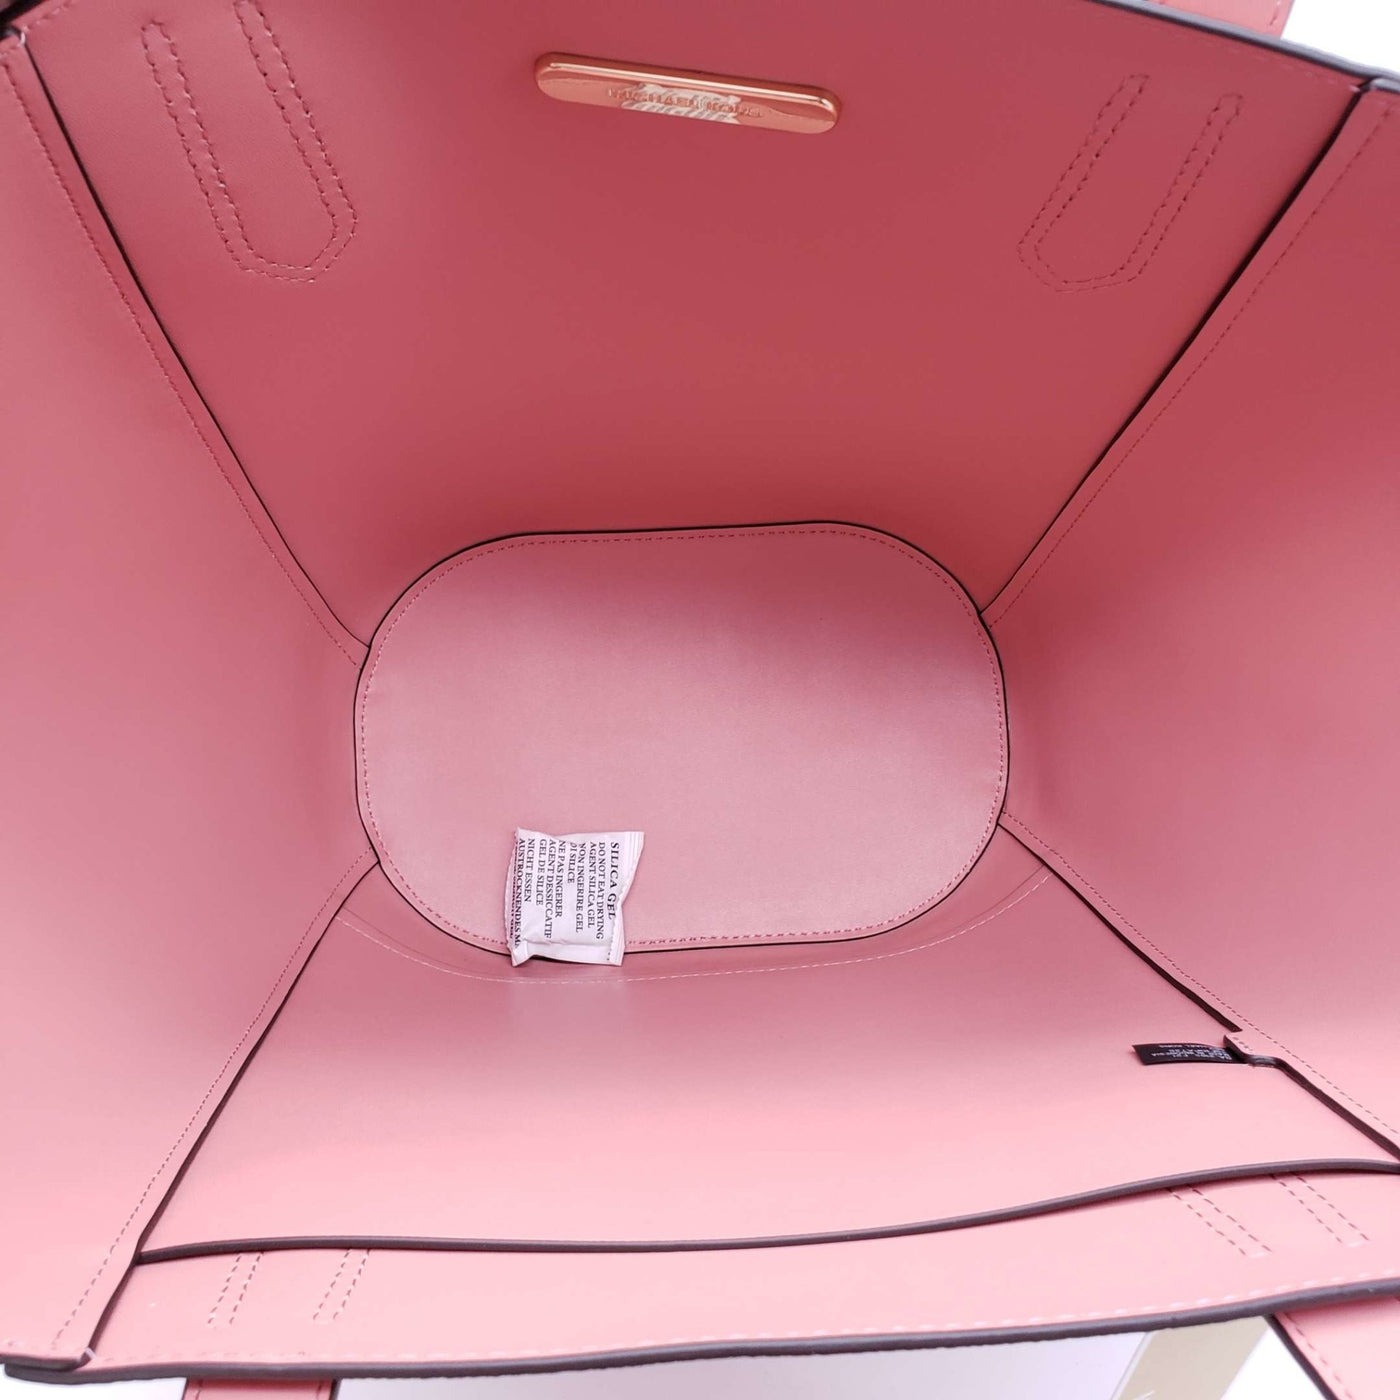 Michael Kors Portia Sunset Rose Large Tote Bag - Luxury Cheaper